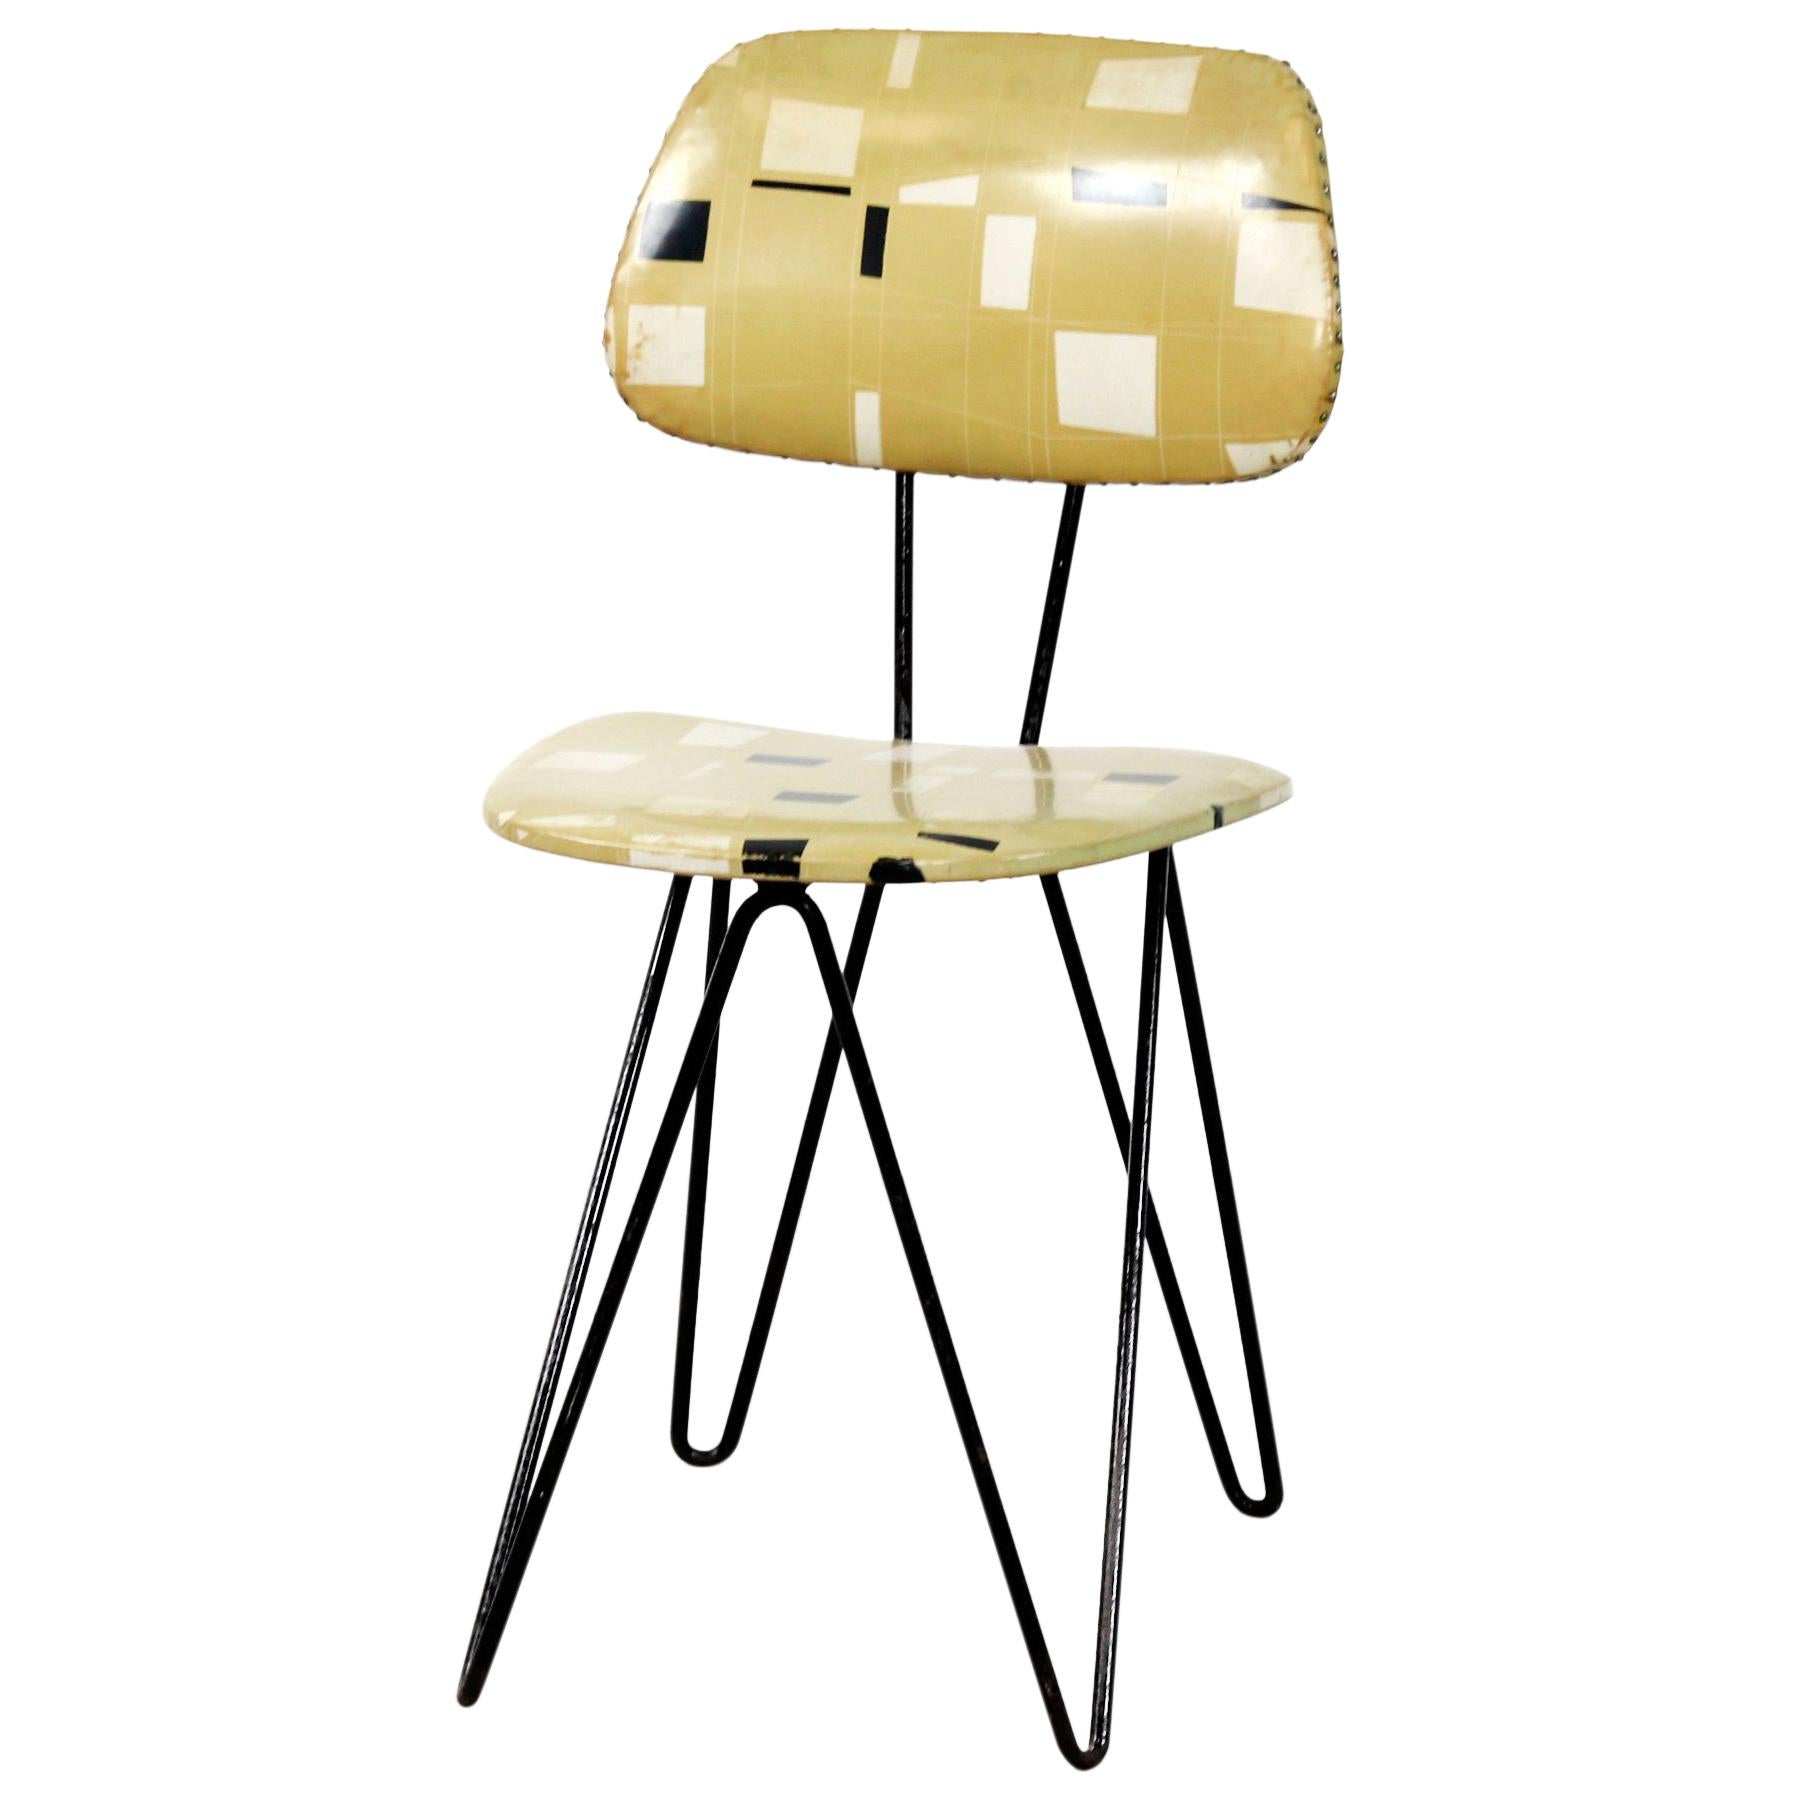 Original Pastoe Dutch Minimalist SM01 Chair by Designer Cees Braakman, 1954